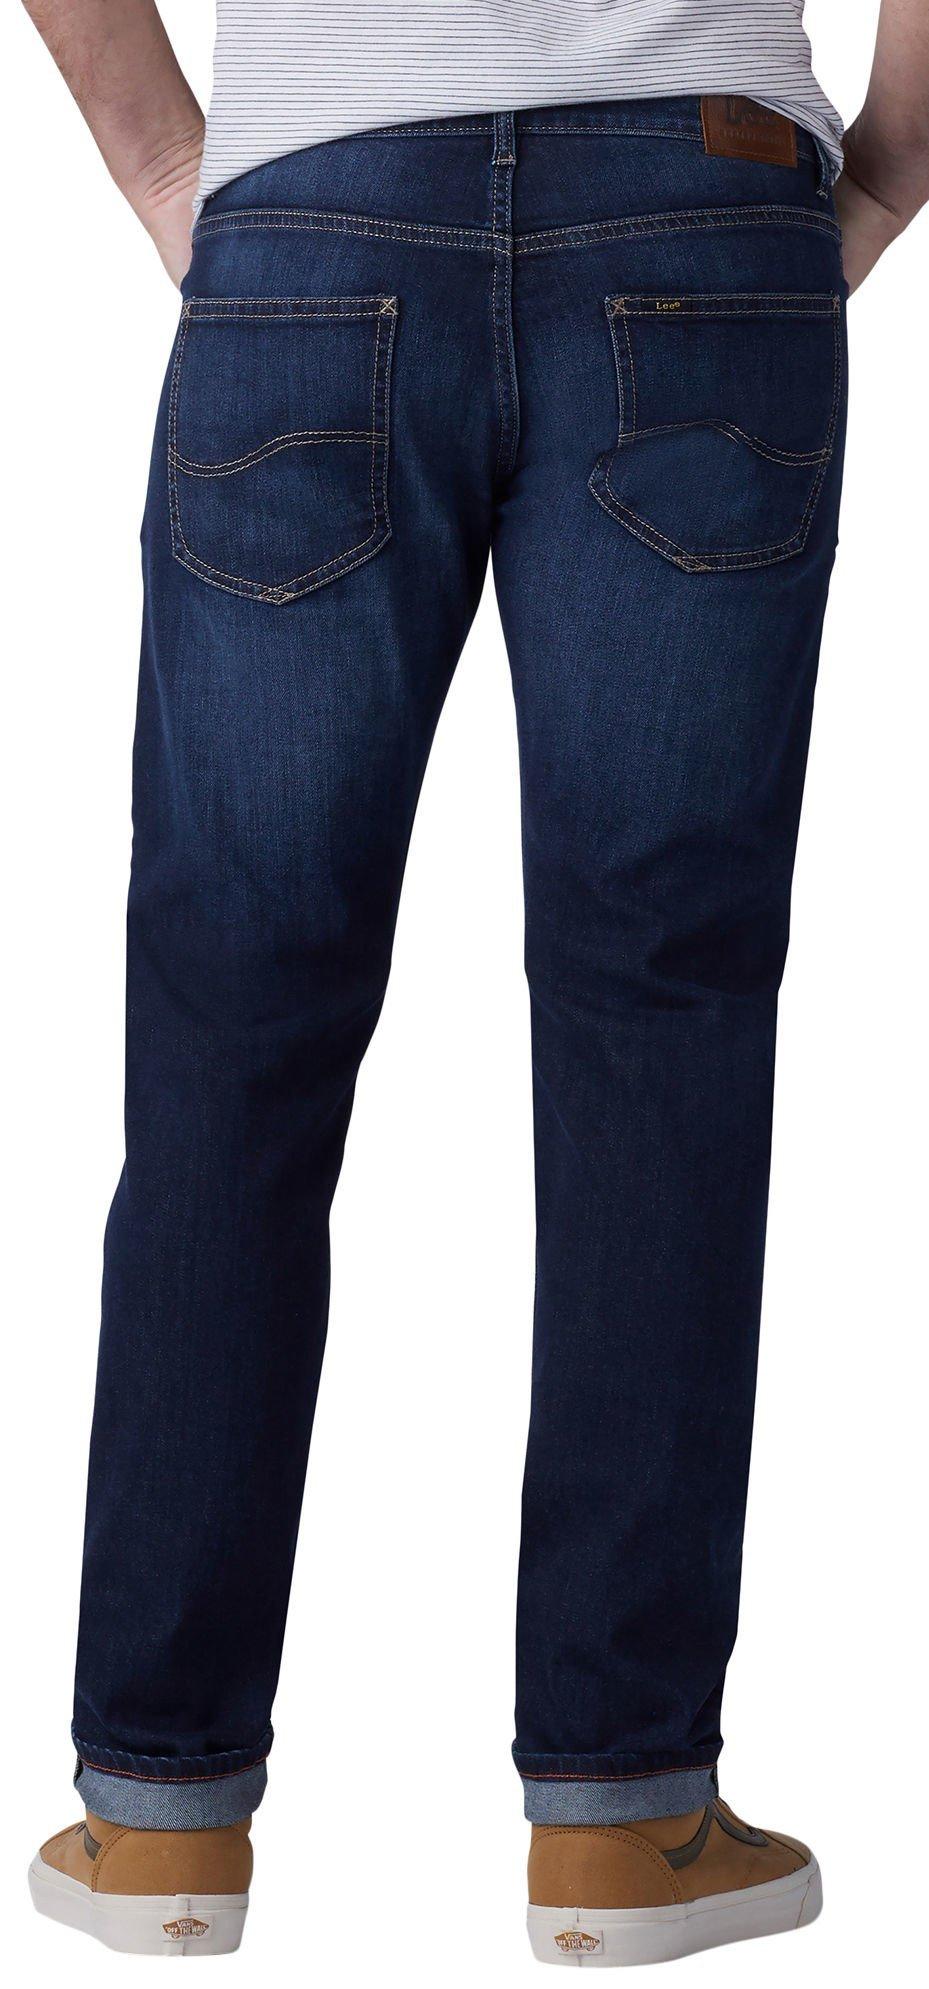 mens jeans tapered leg